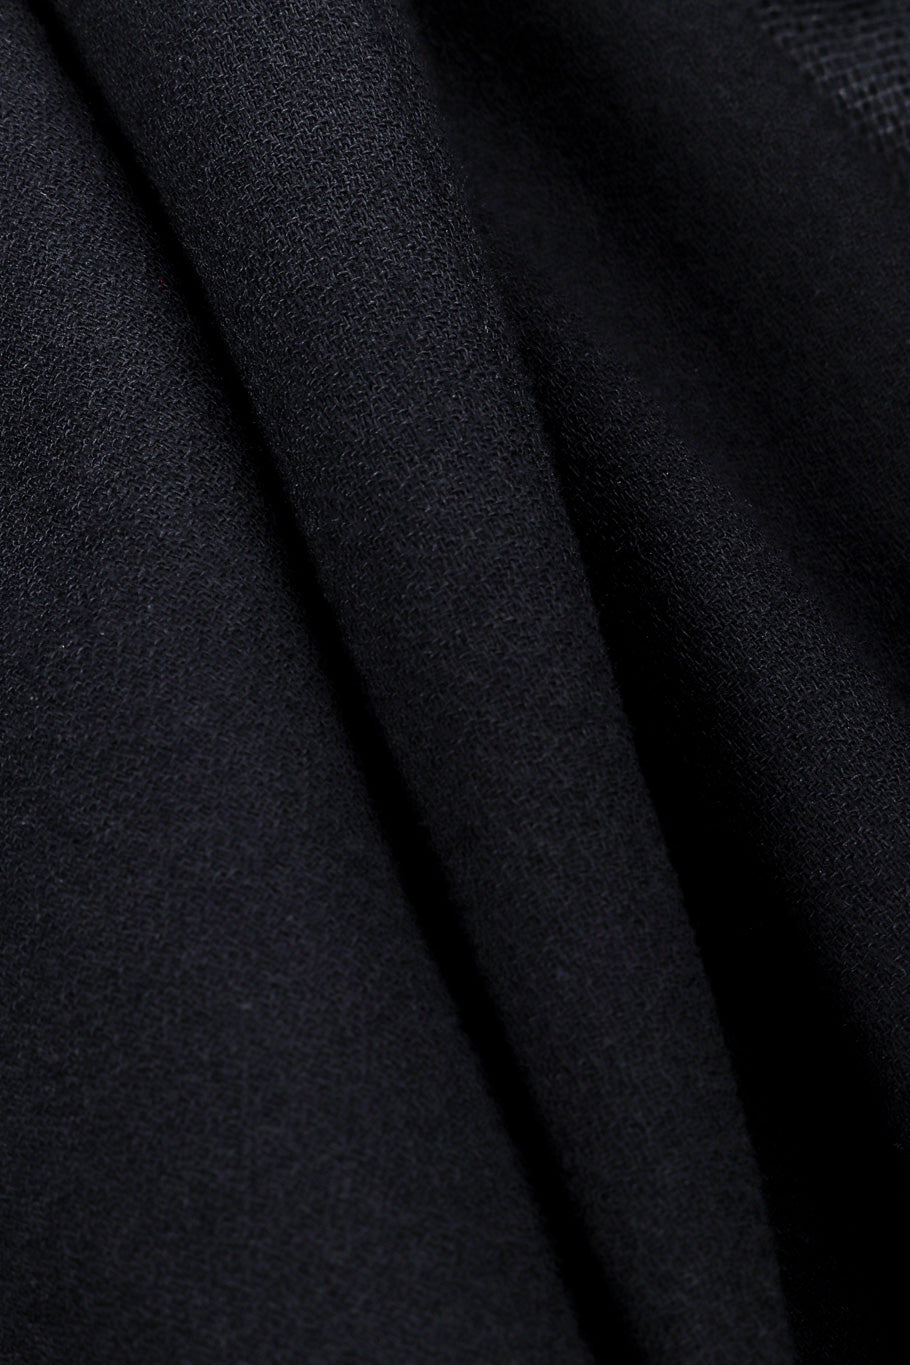 Vintage Bob Mackie Strapless Iridescent Gown fabric closeup @recessla